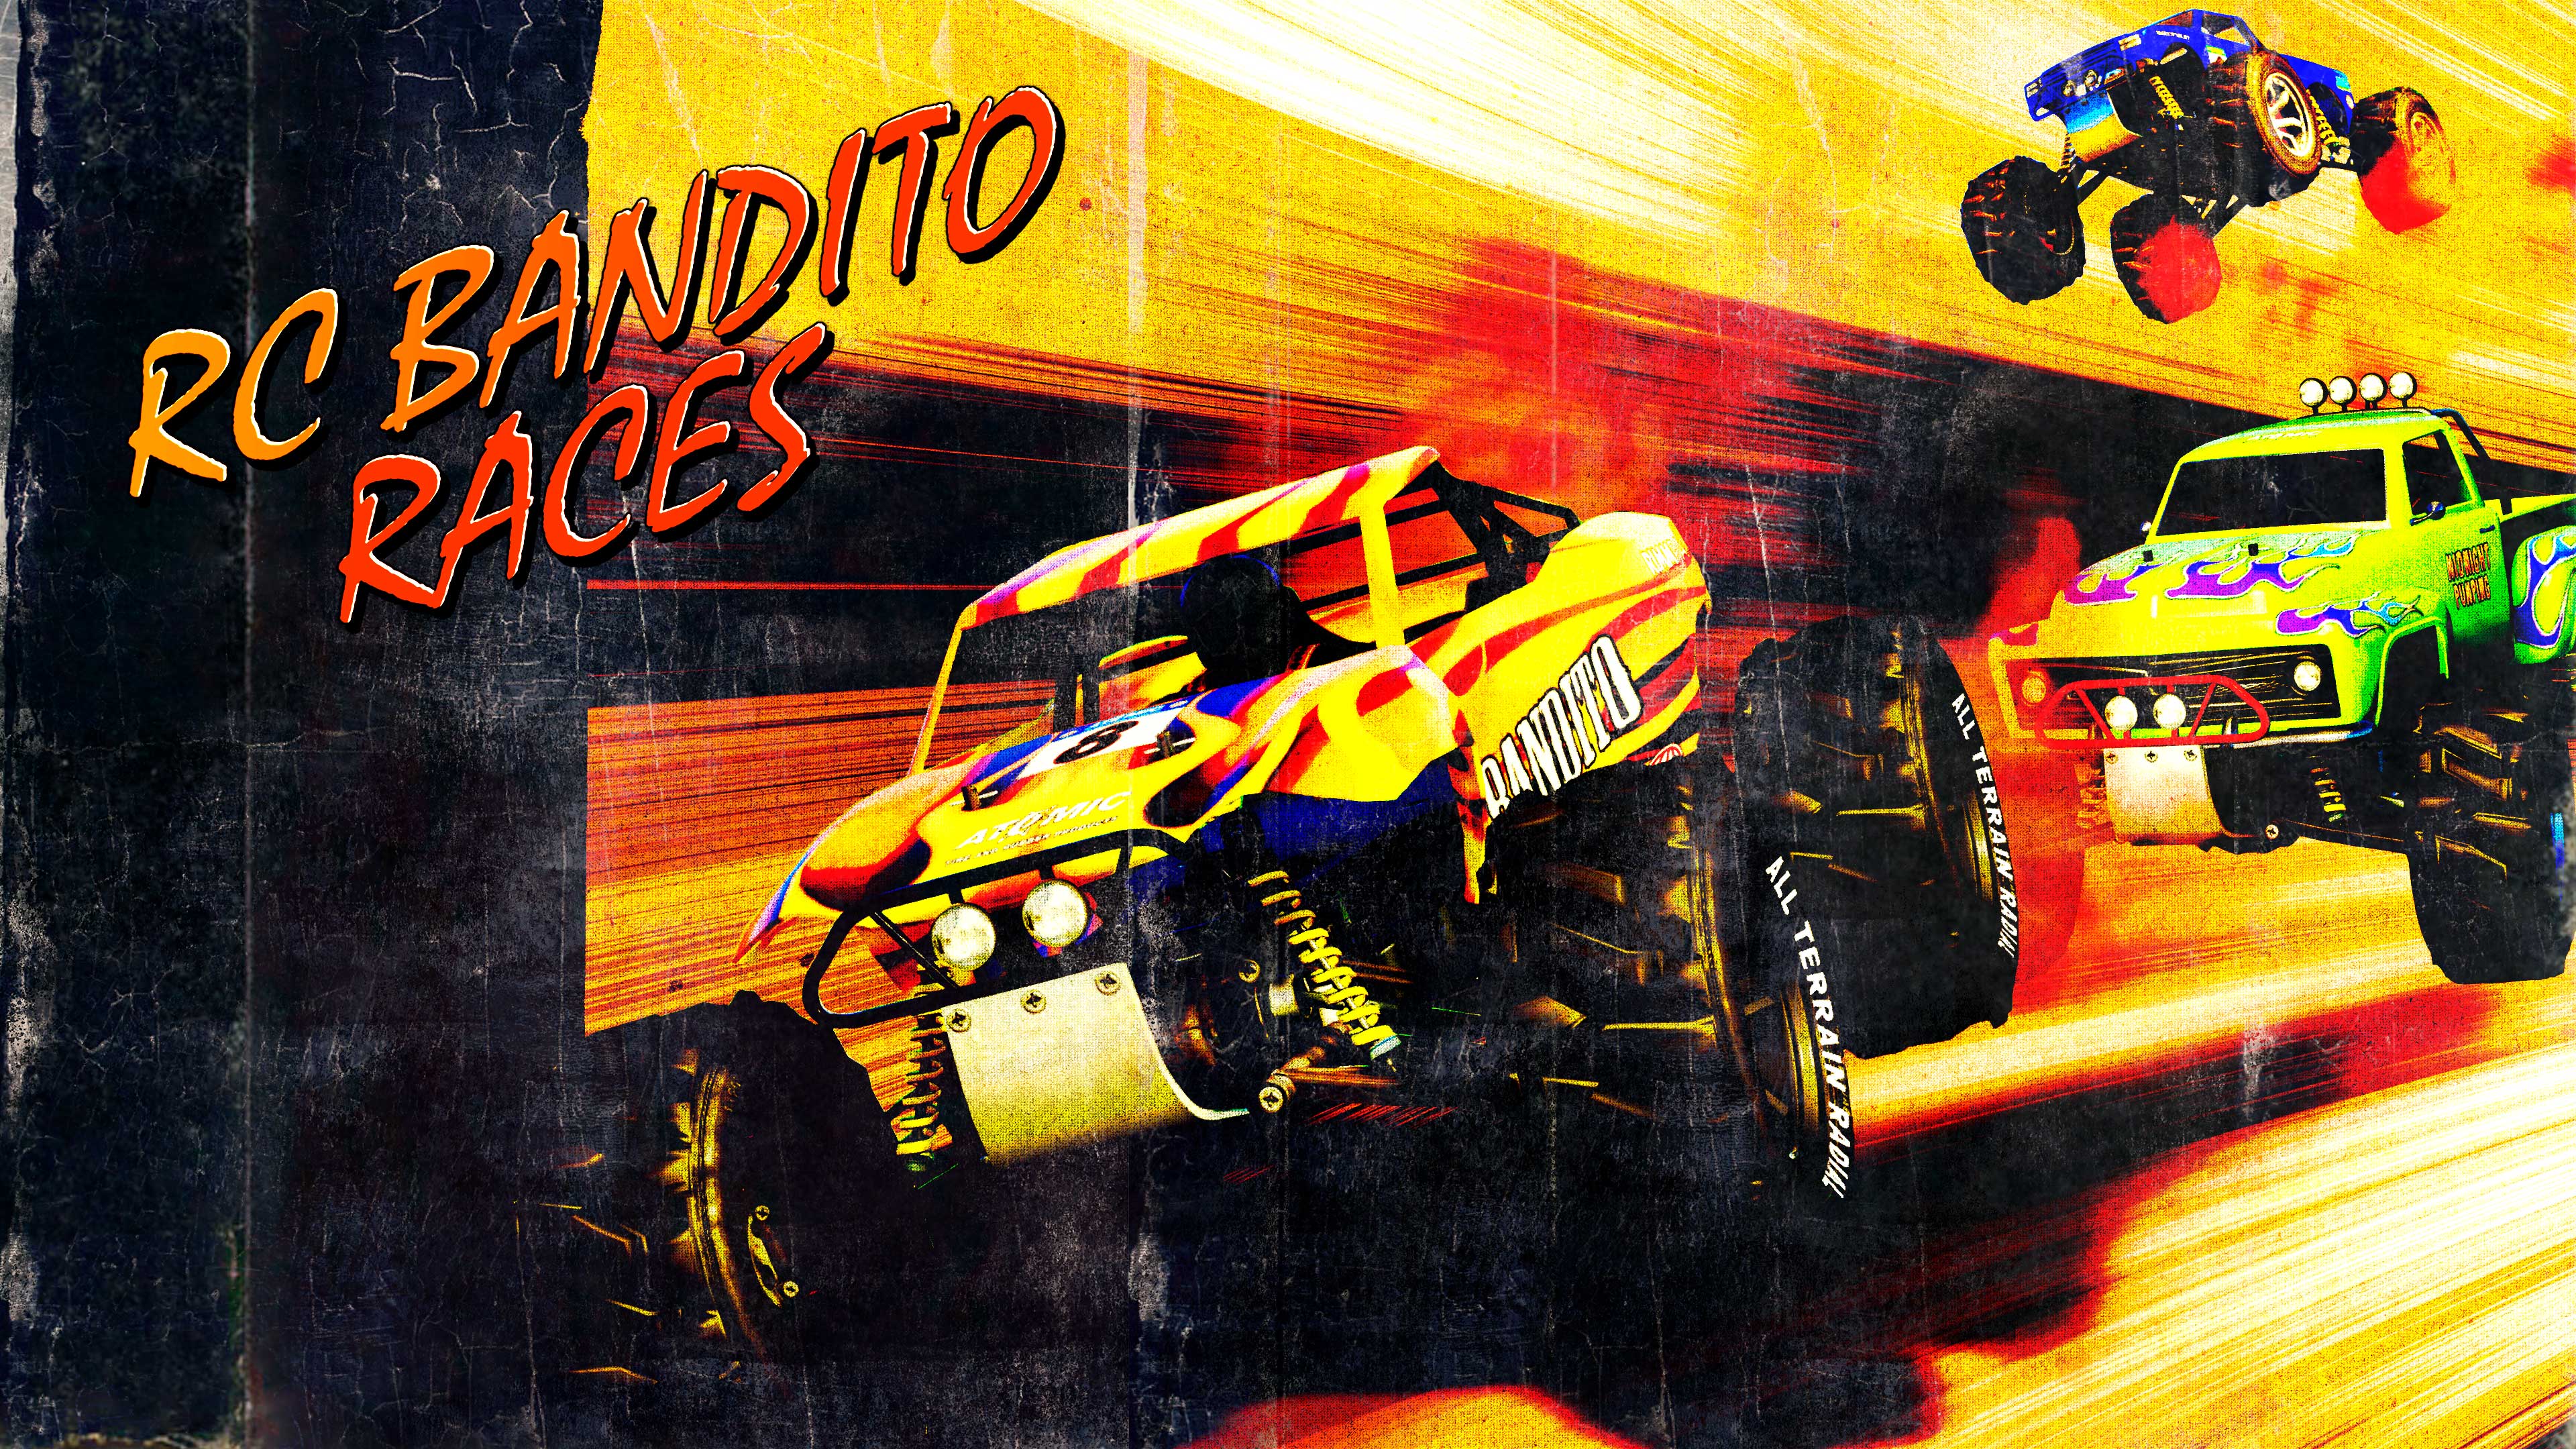 gta online rc bandito races image 7